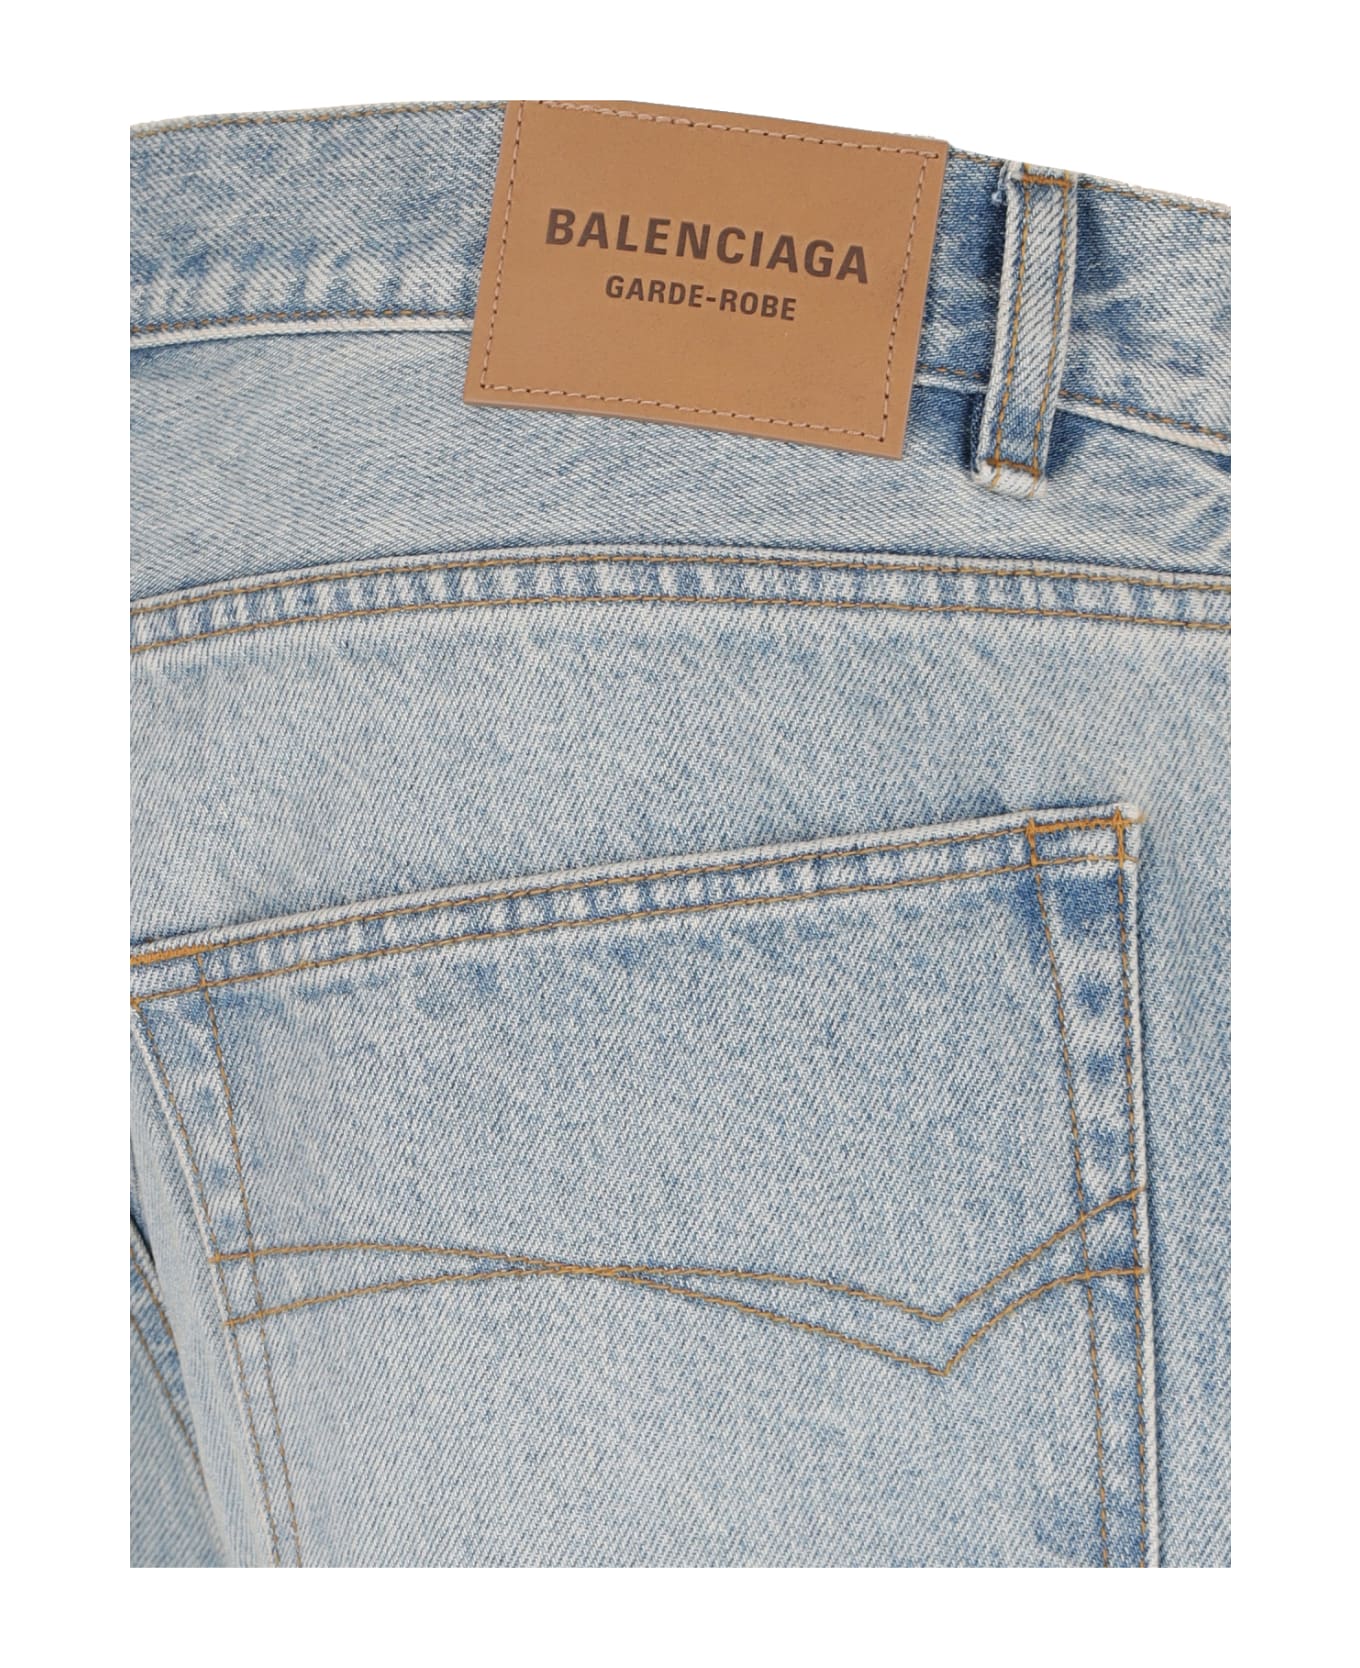 Balenciaga Jeans Flare - Light Blue